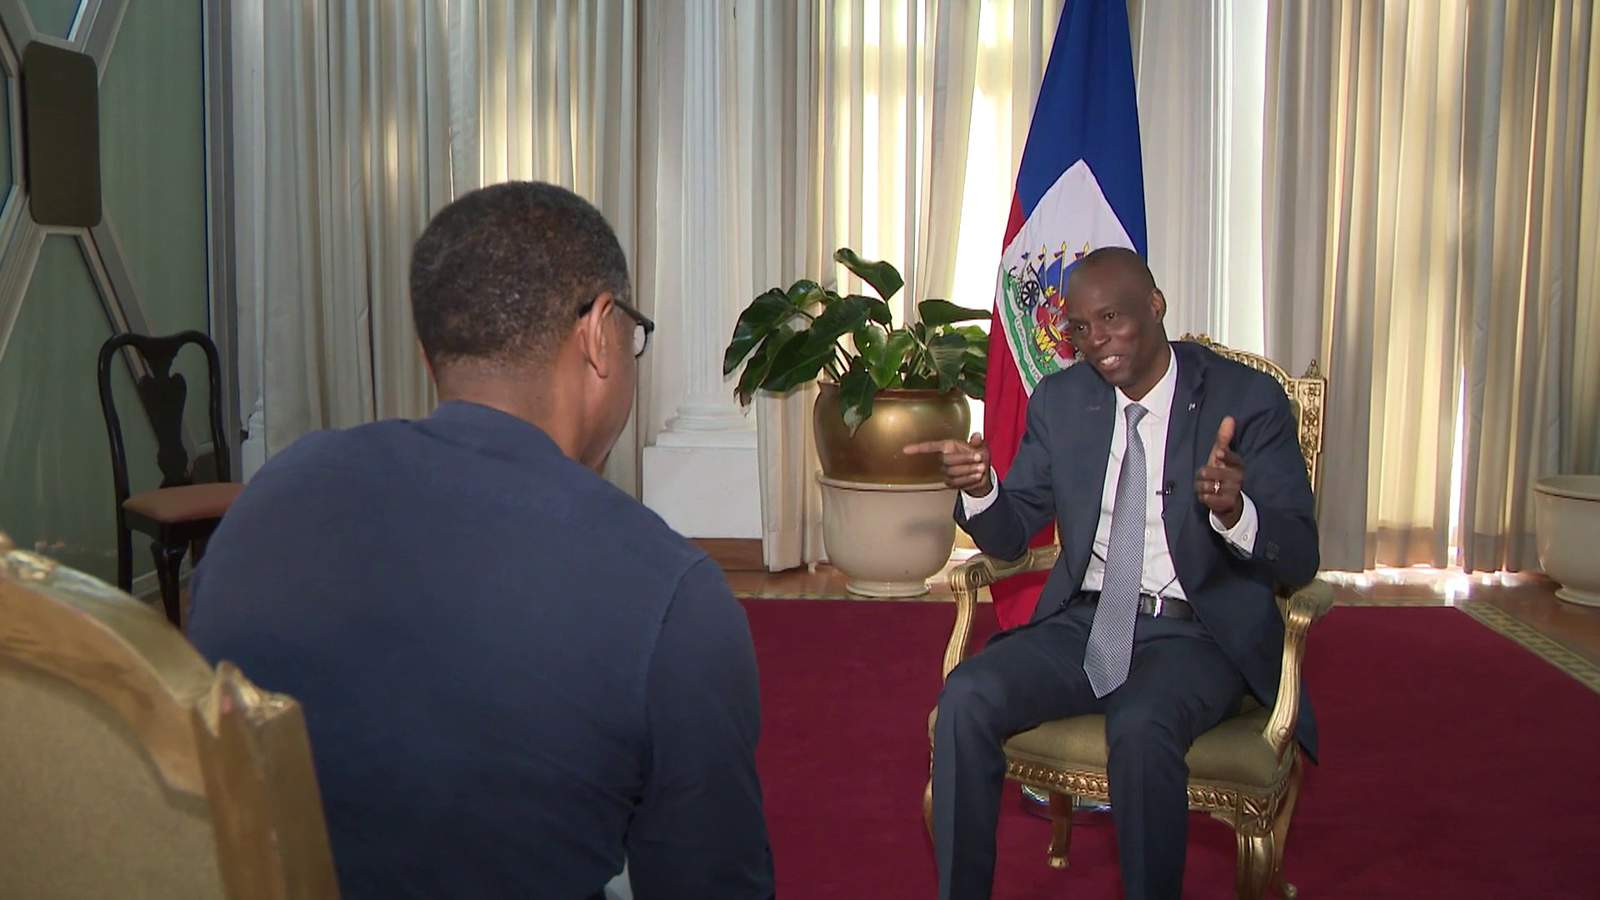 Local 10's Calvin Hughes interviews Haitian President Jovenel Moïse